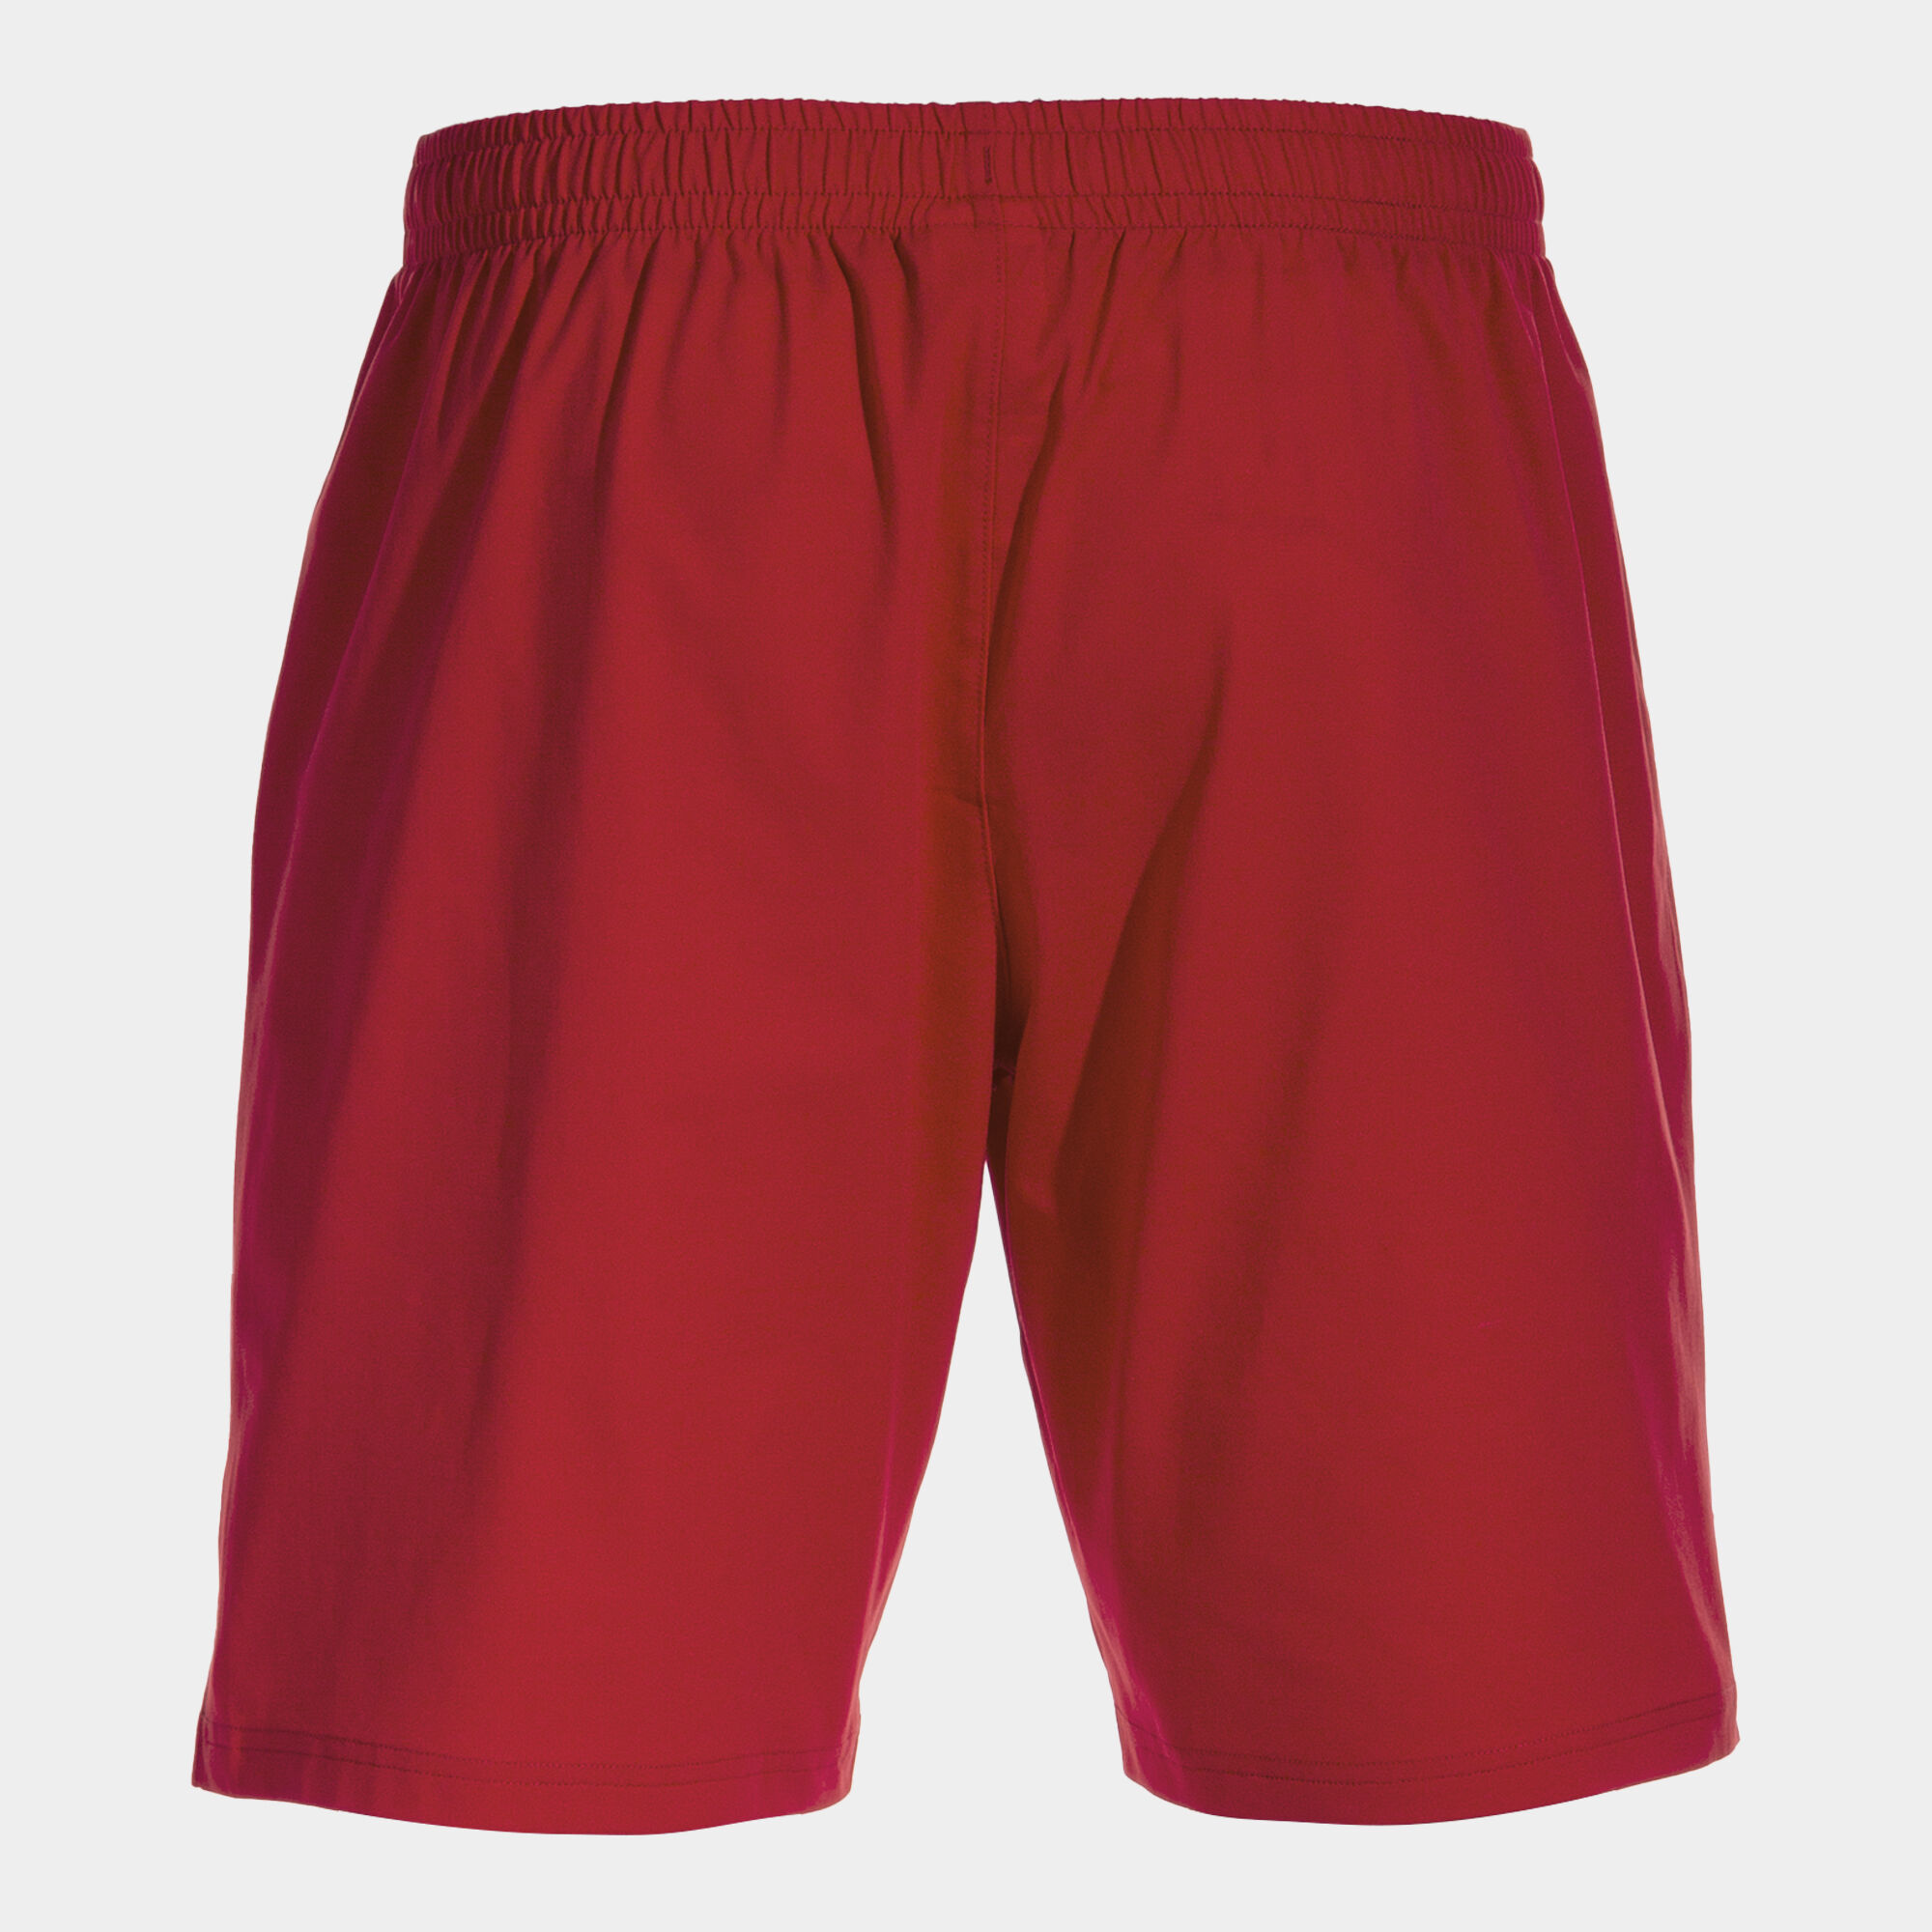 Shorts man Eurocopa III red